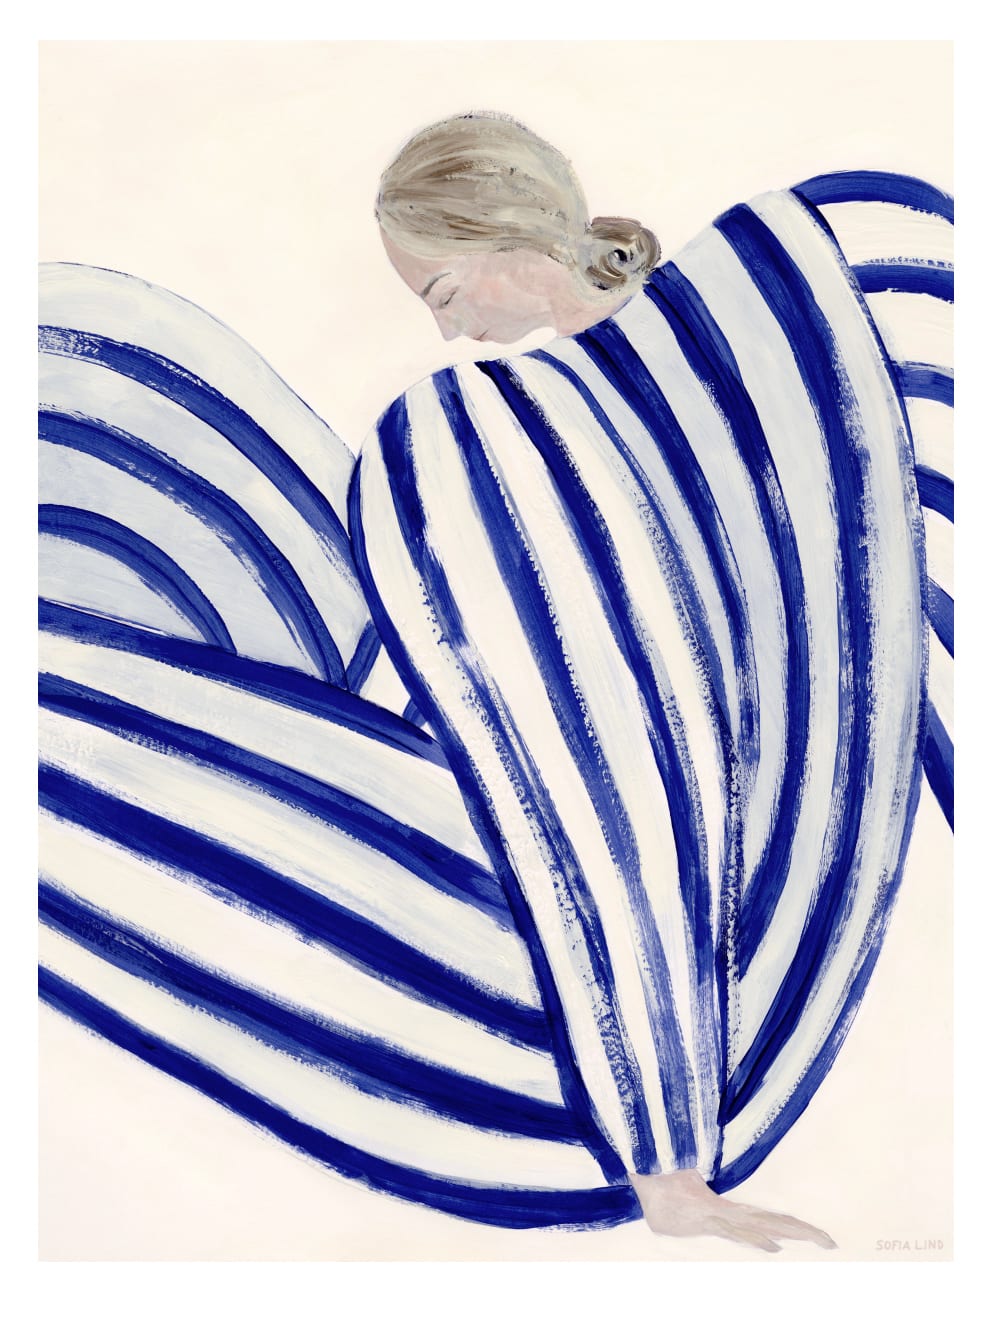 Sofia Lind Blue stripe at concorde A5 art card